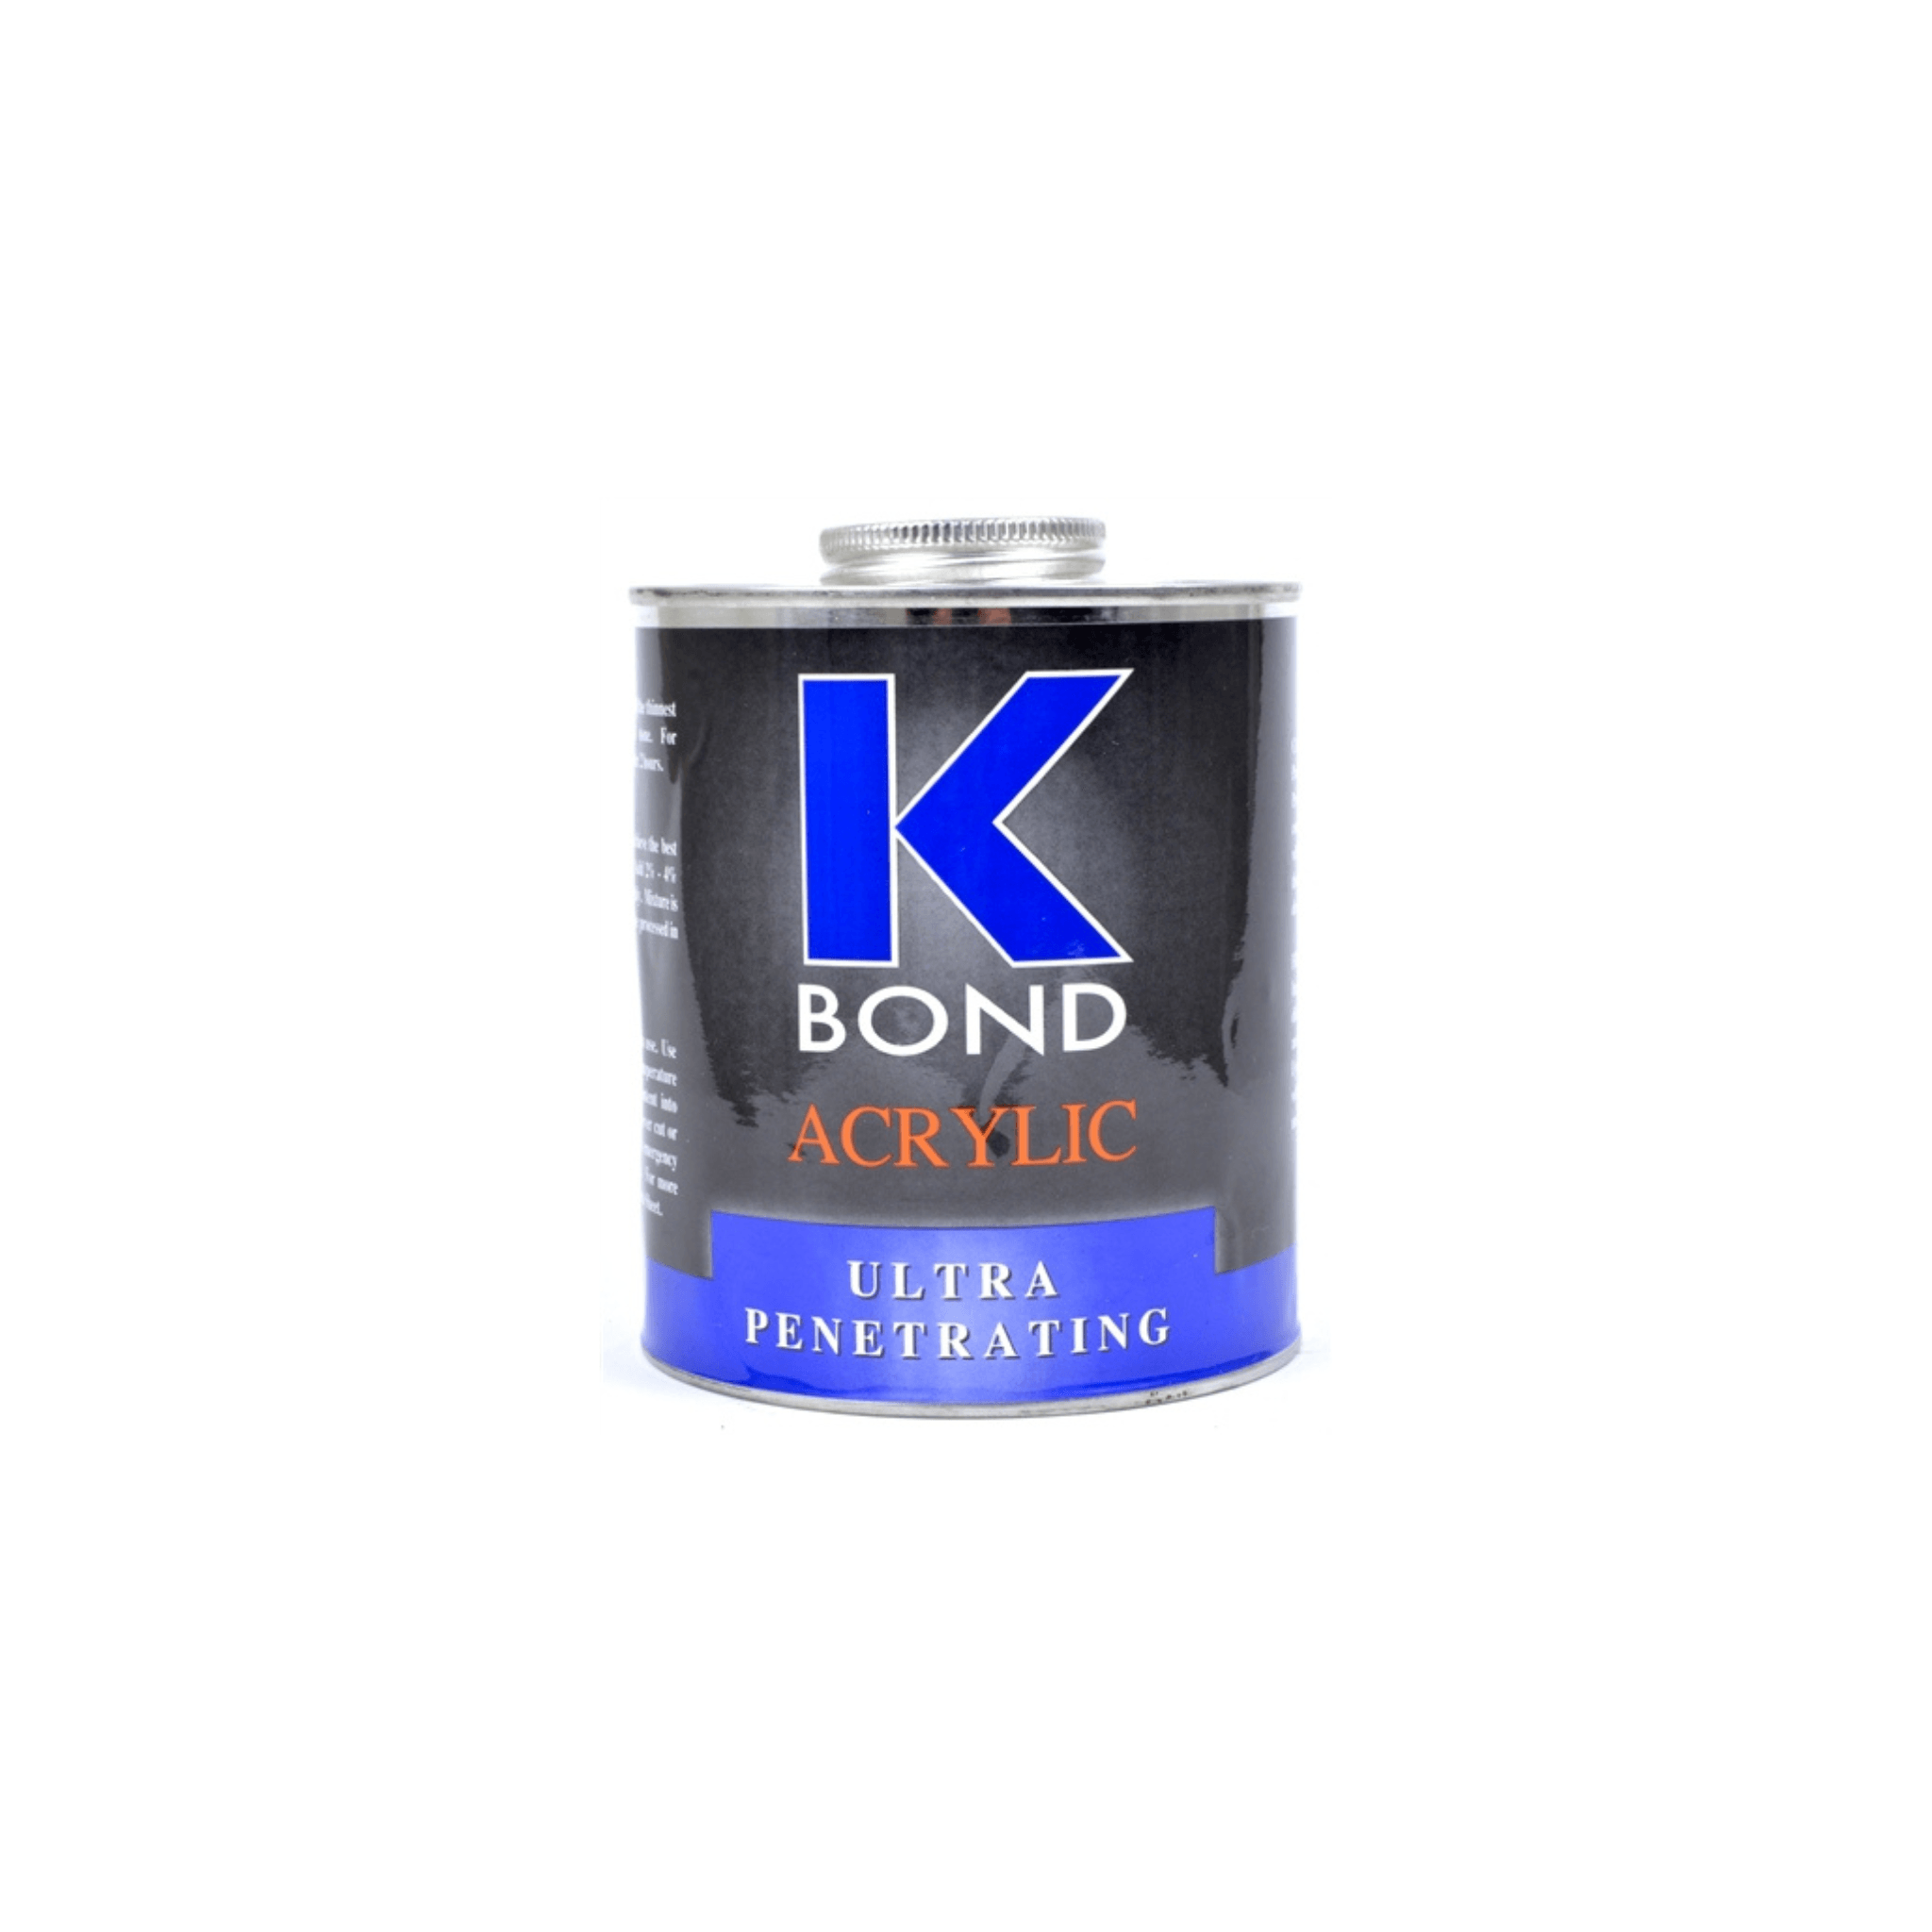 K-Bond ACRYLIC Ultra Penetrating - Direct Stone Tool Supply, Inc